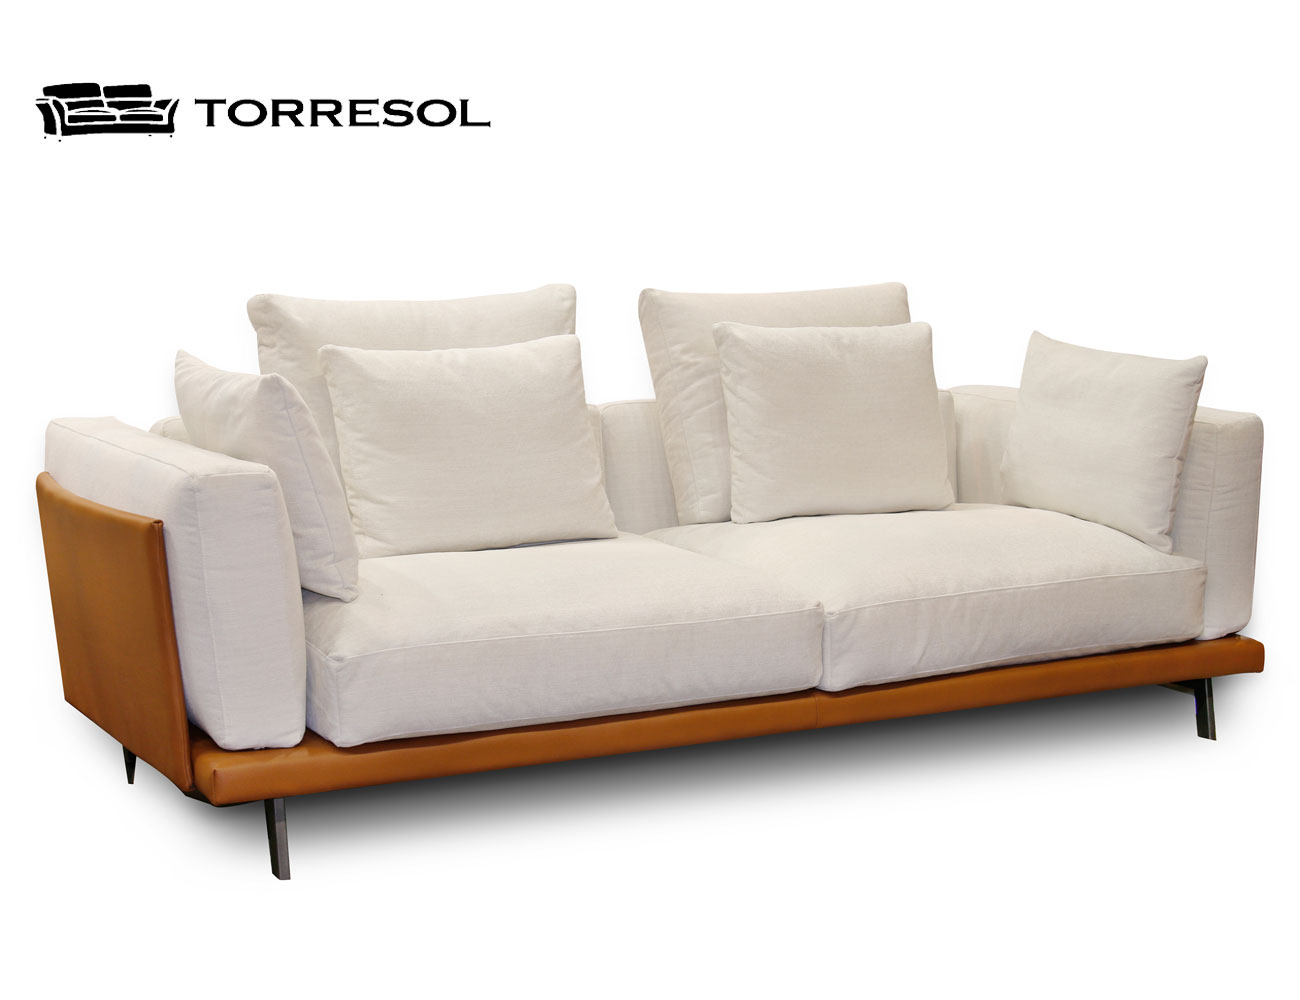 Sofa tango torresol 1